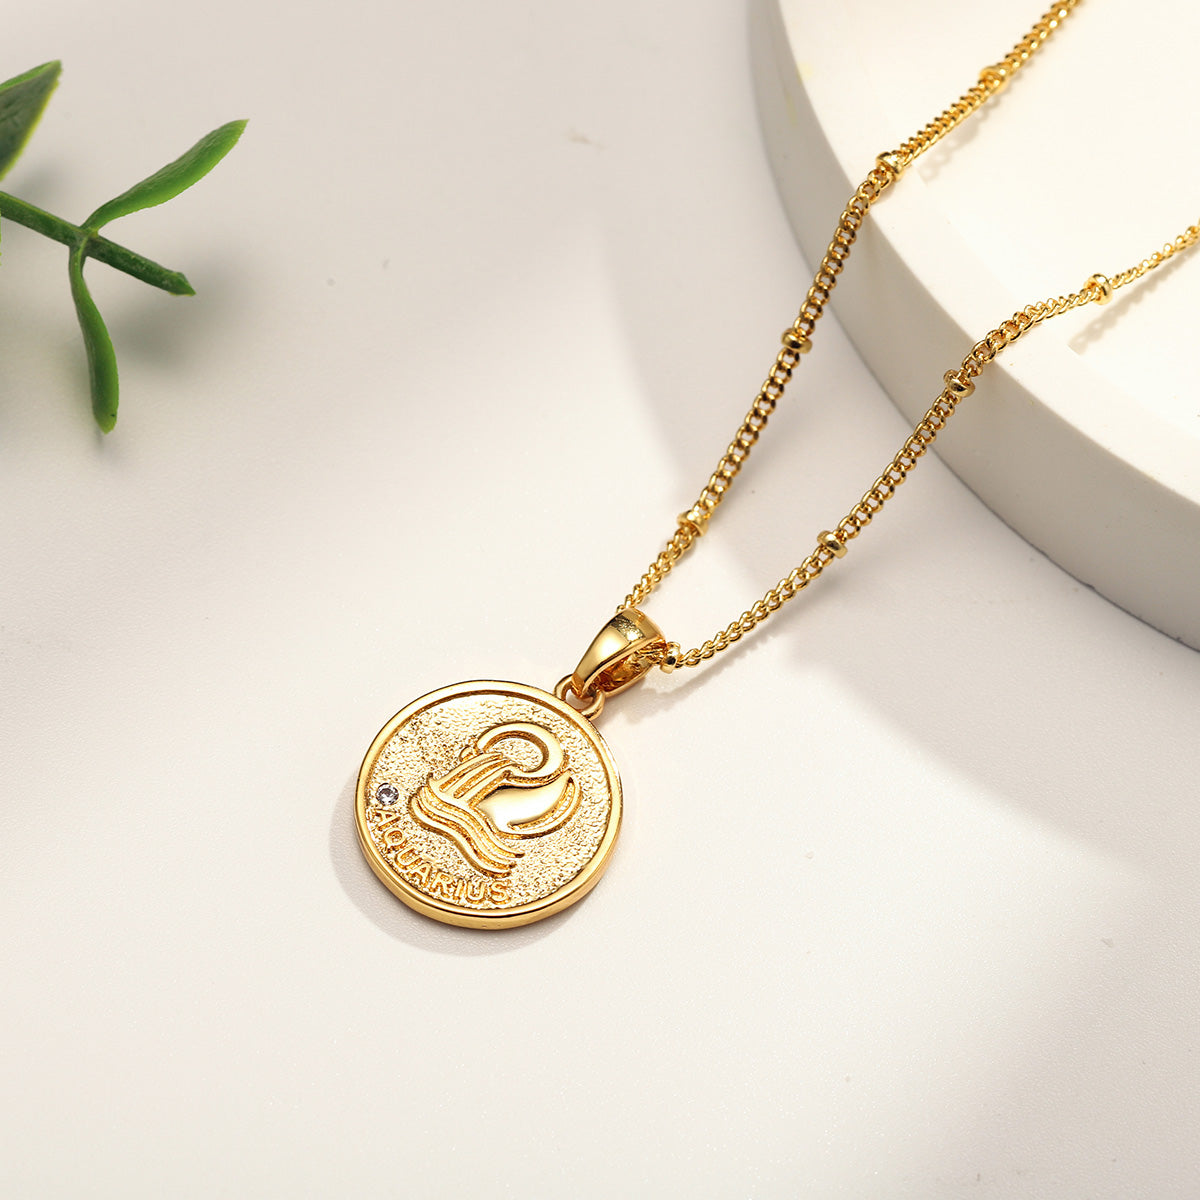 Aquarius Constellation Coin Pendant Vintage Necklace